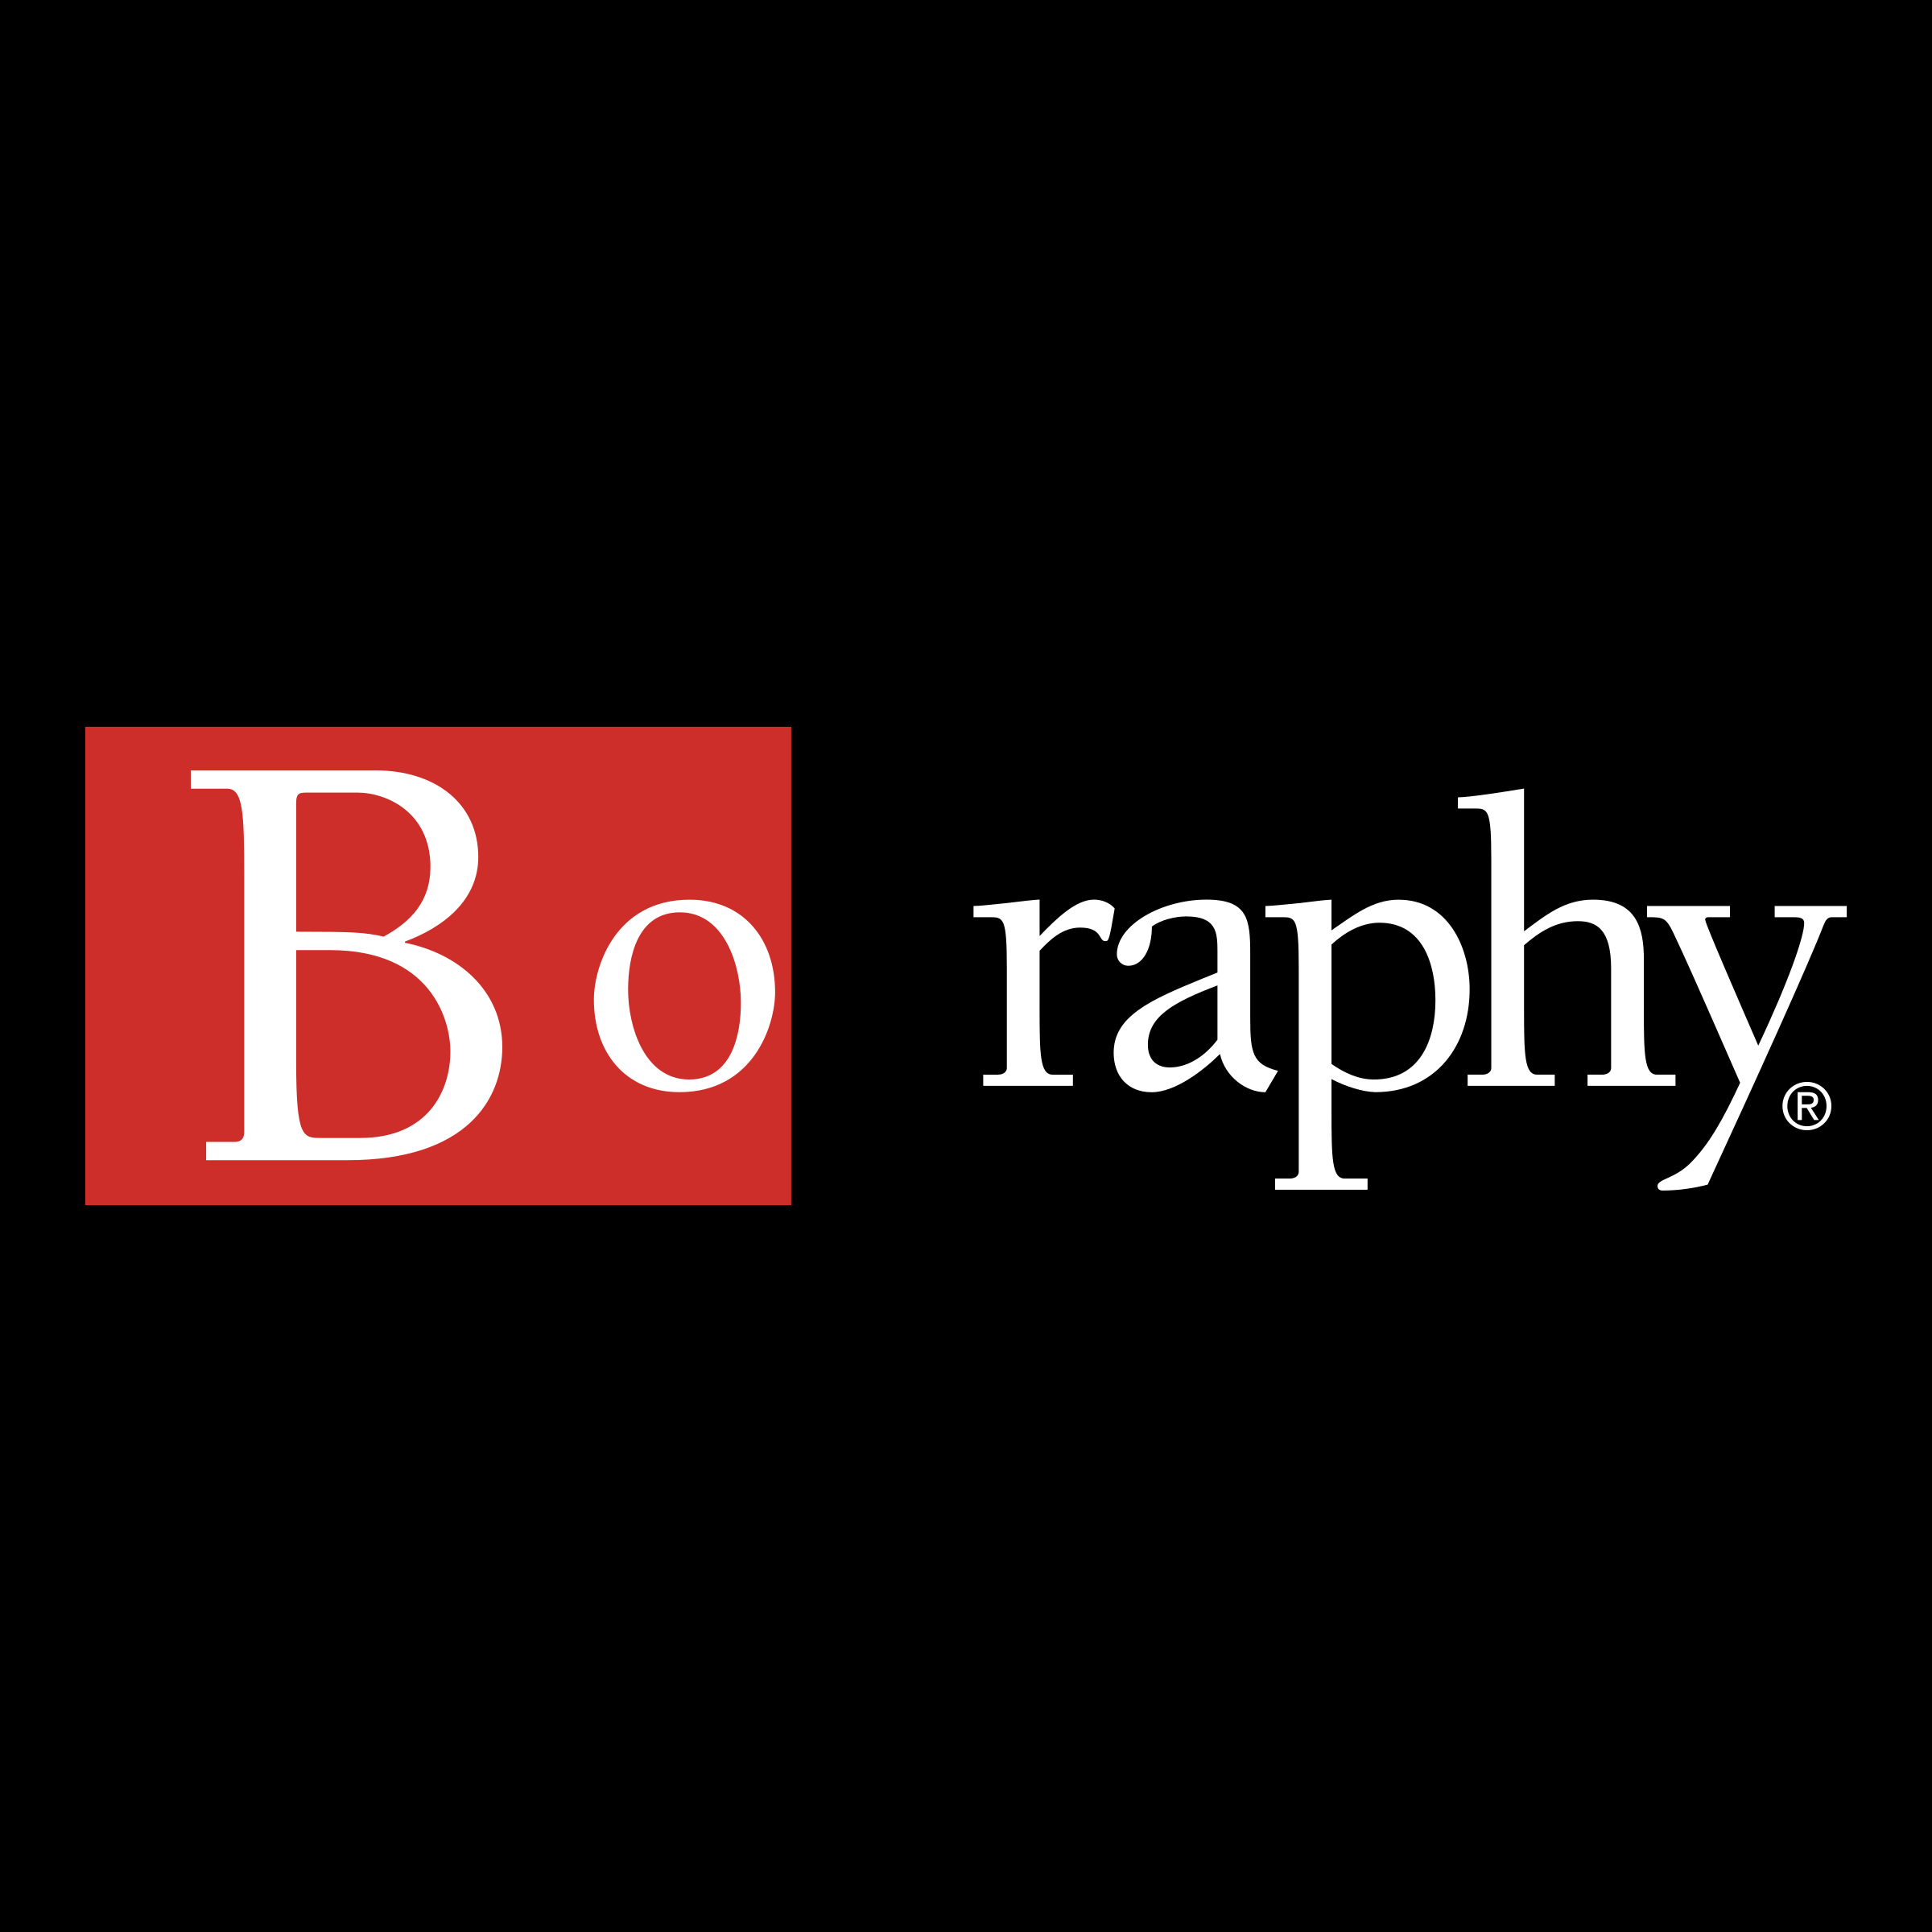 Biography.com Logo - Biography Channel Logo PNG Transparent & SVG Vector - Freebie Supply